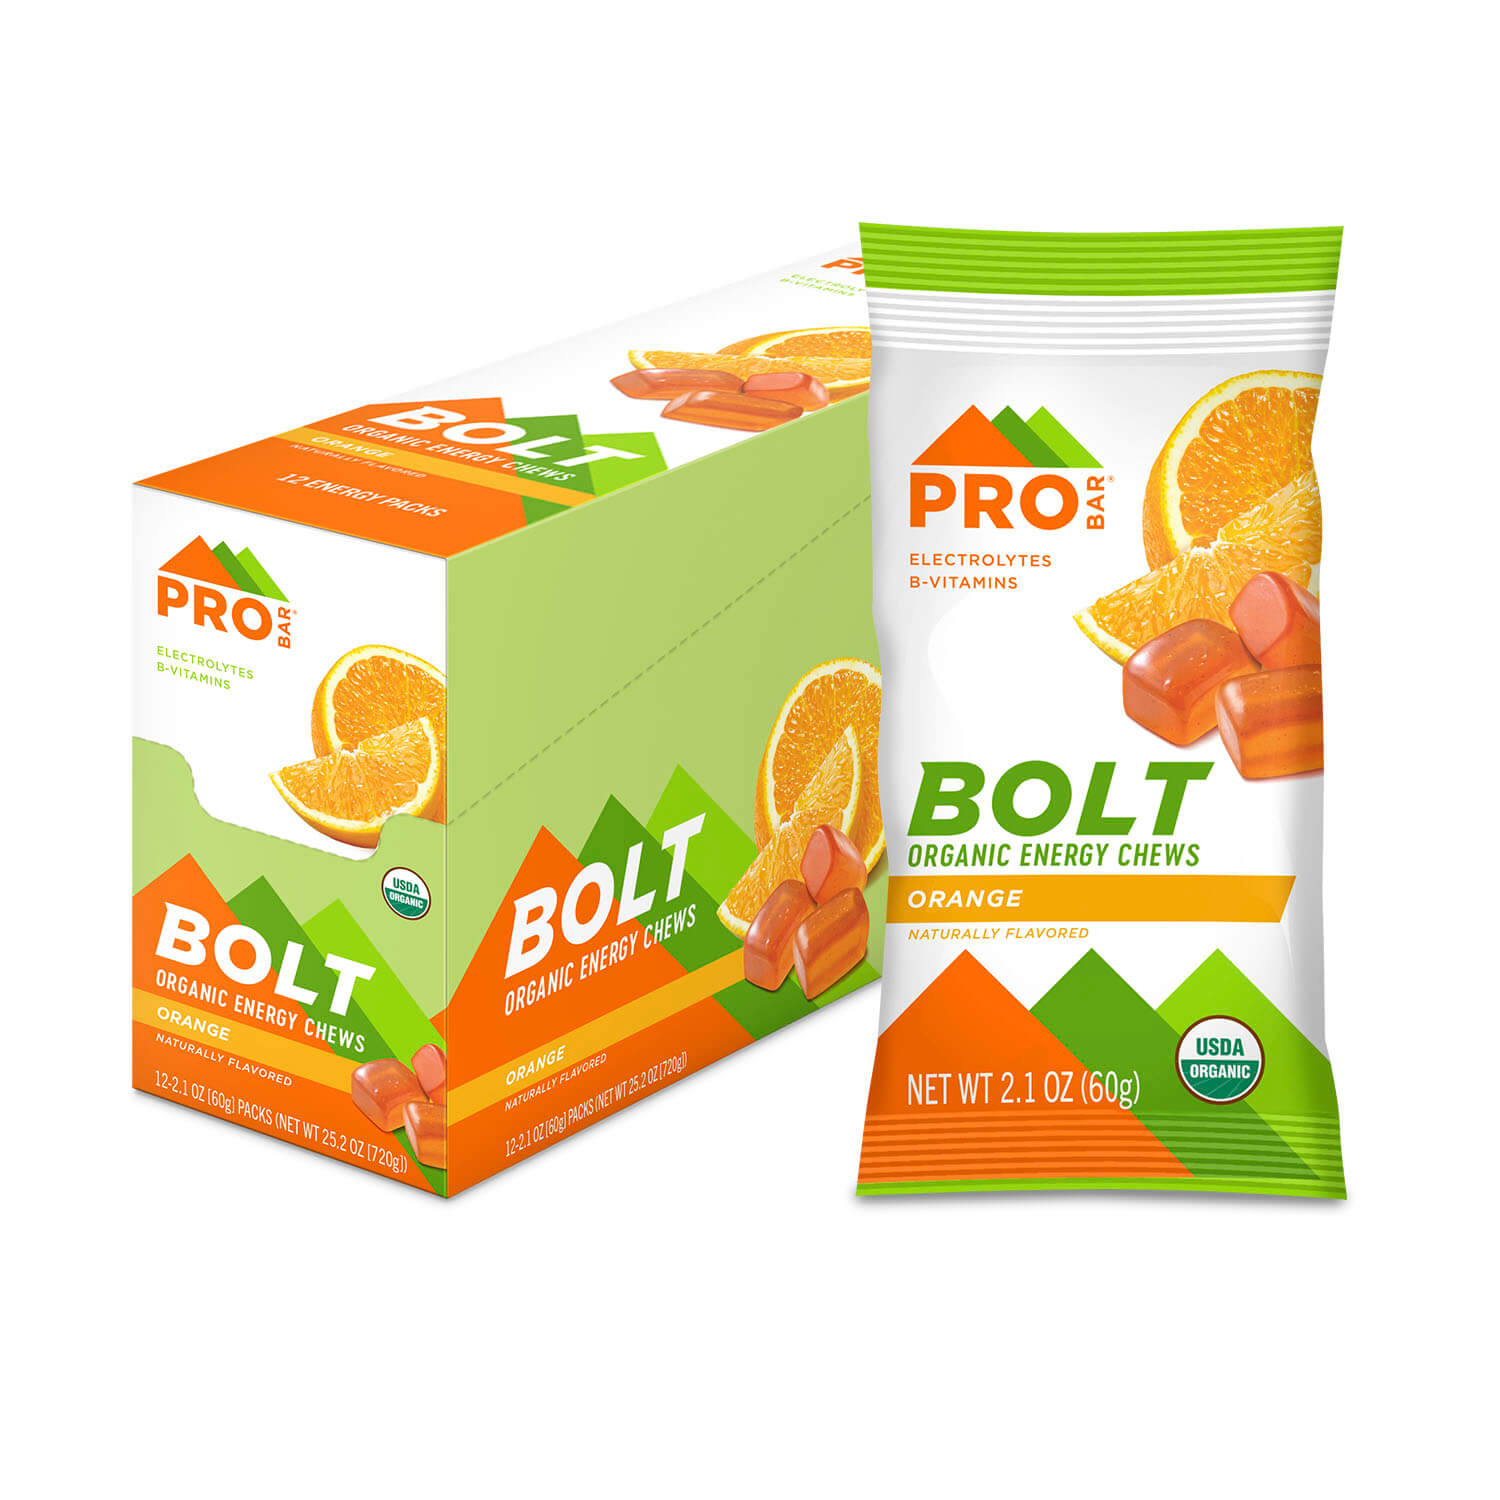 BOLT Energy Chew Orange 12-Pack